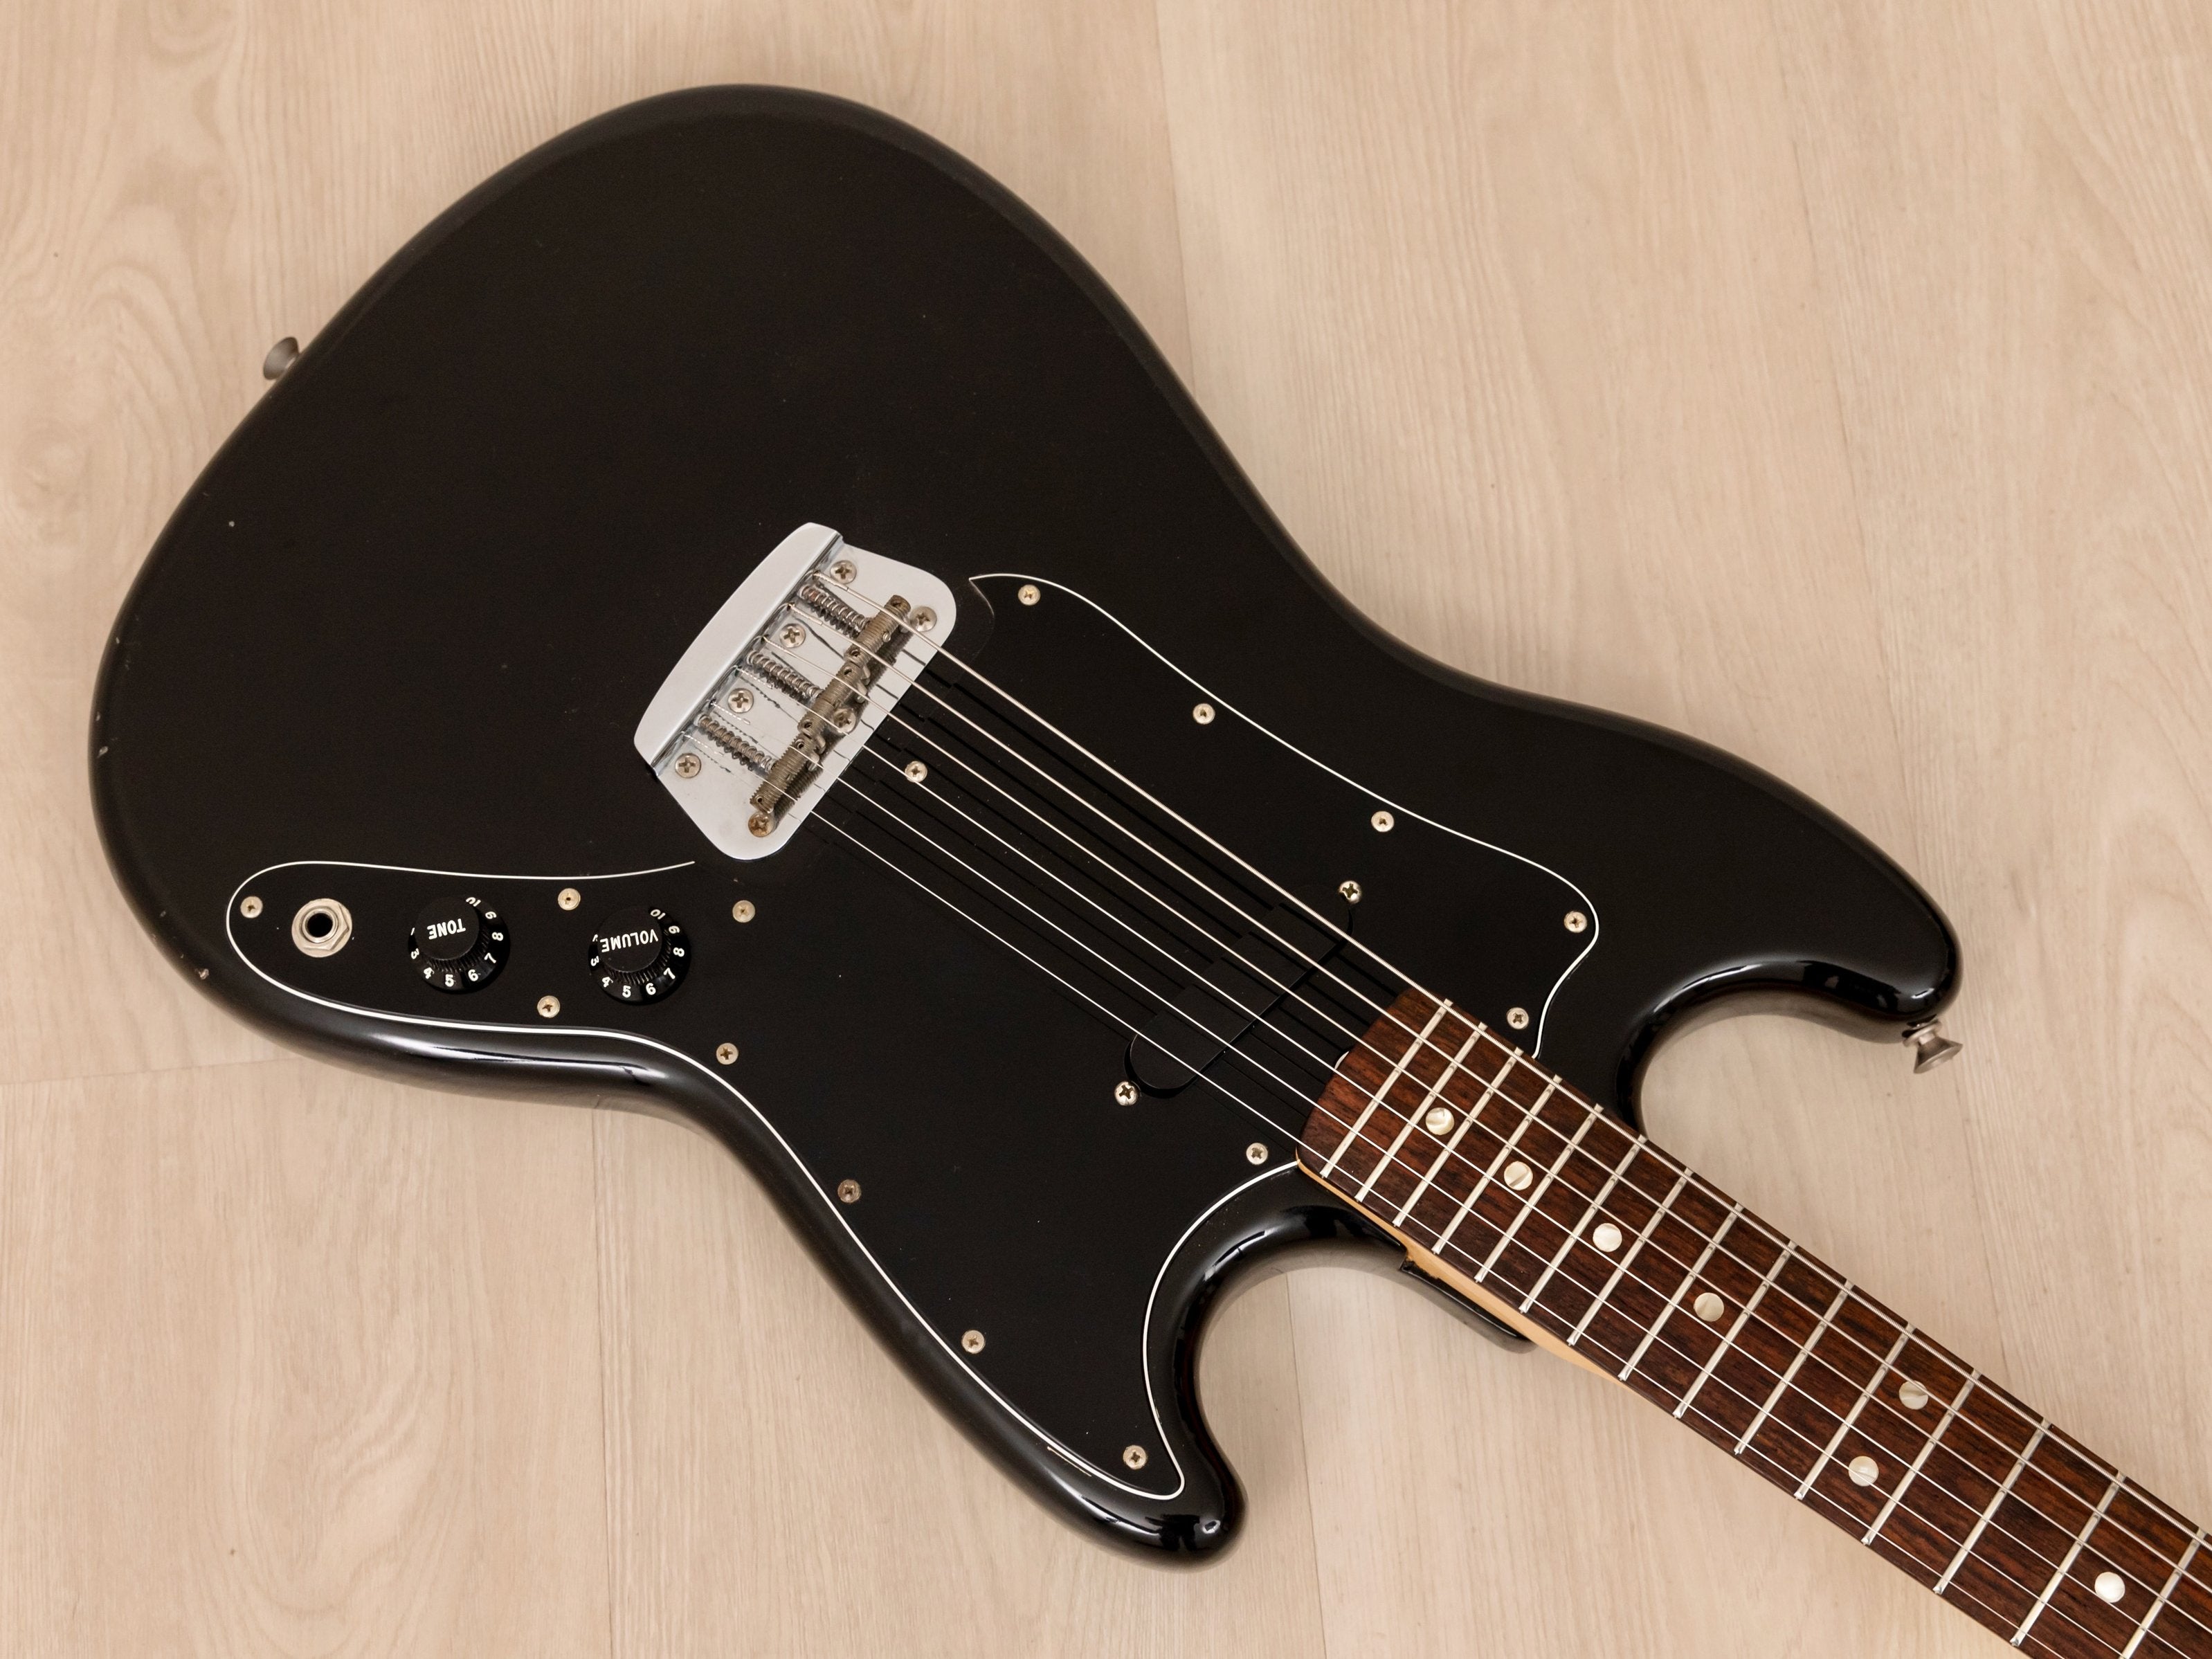 1978 Fender Musicmaster Vintage Offset Guitar Black, 100% Original w/ Hangtags, Case